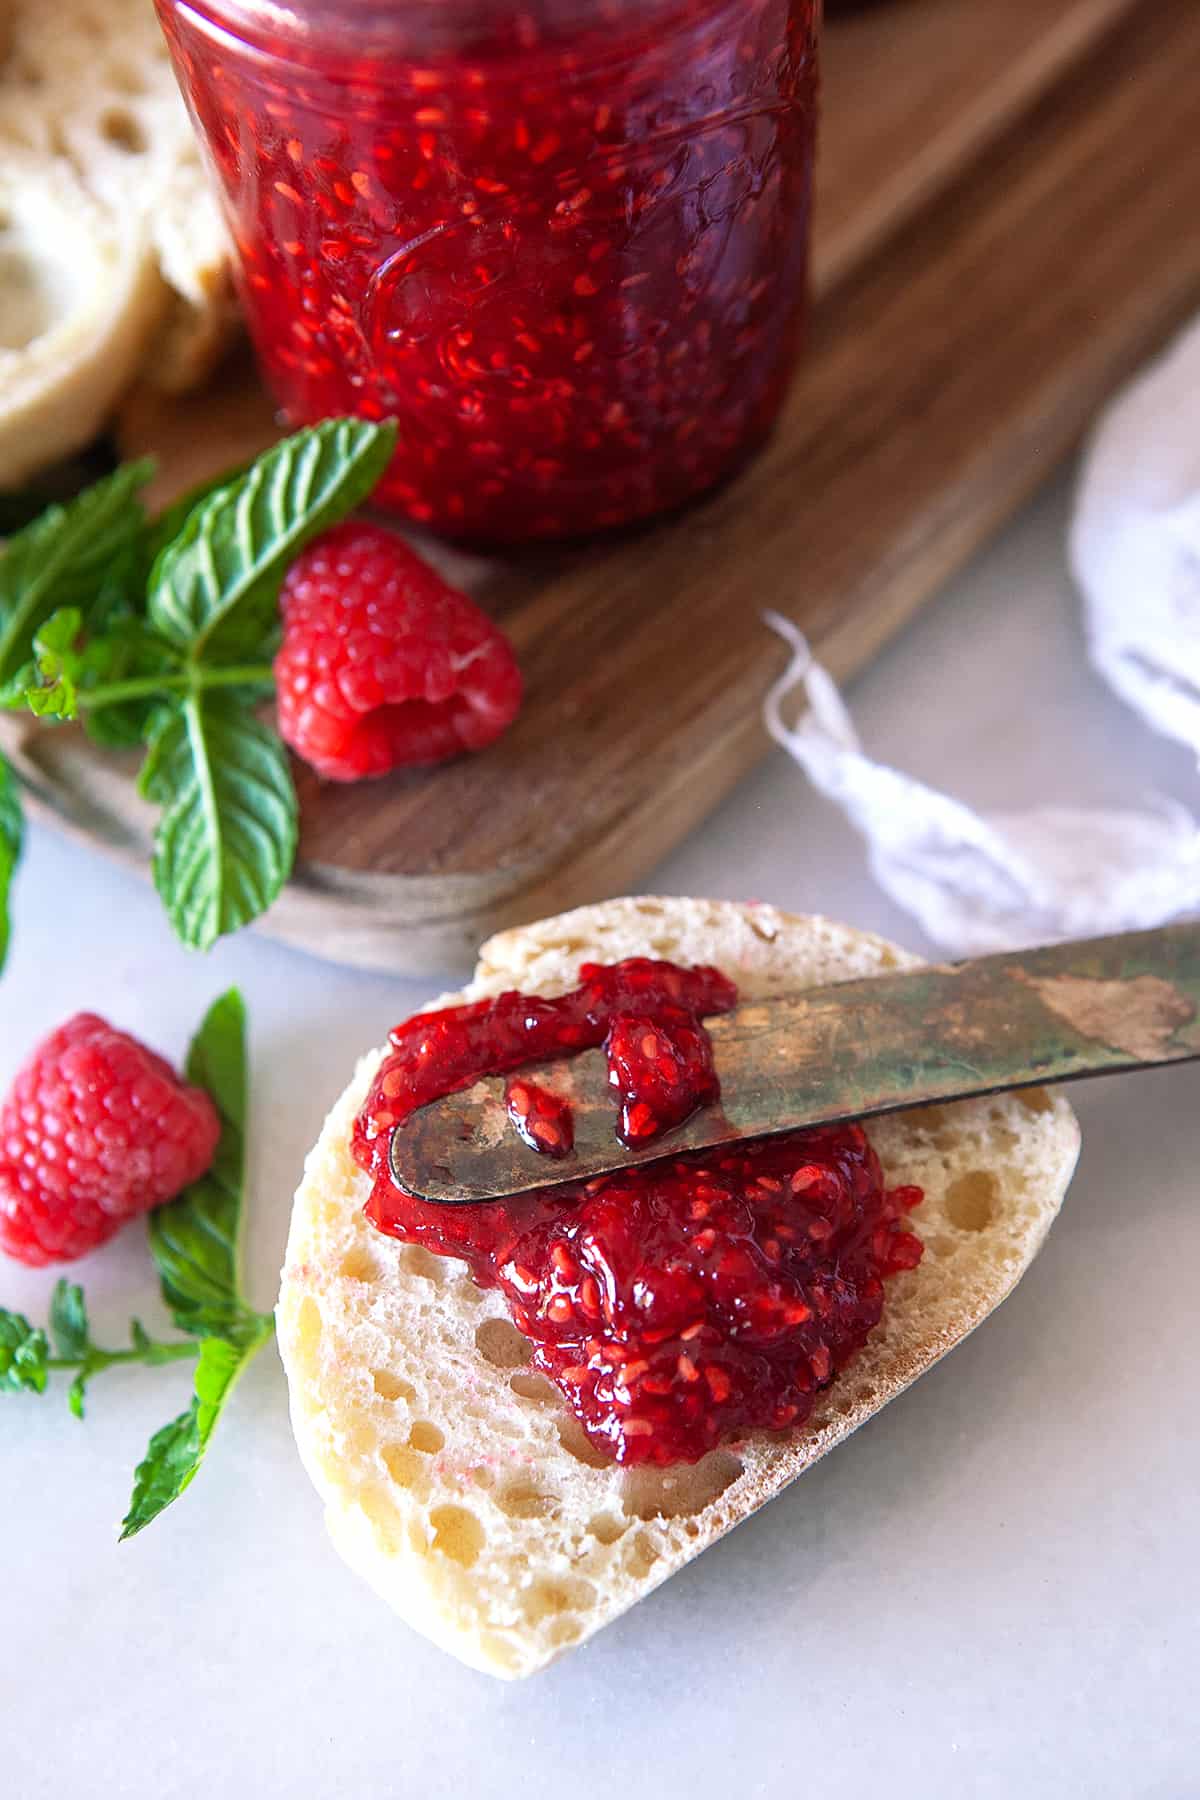 Spreading raspberry jam on an English muffin. 